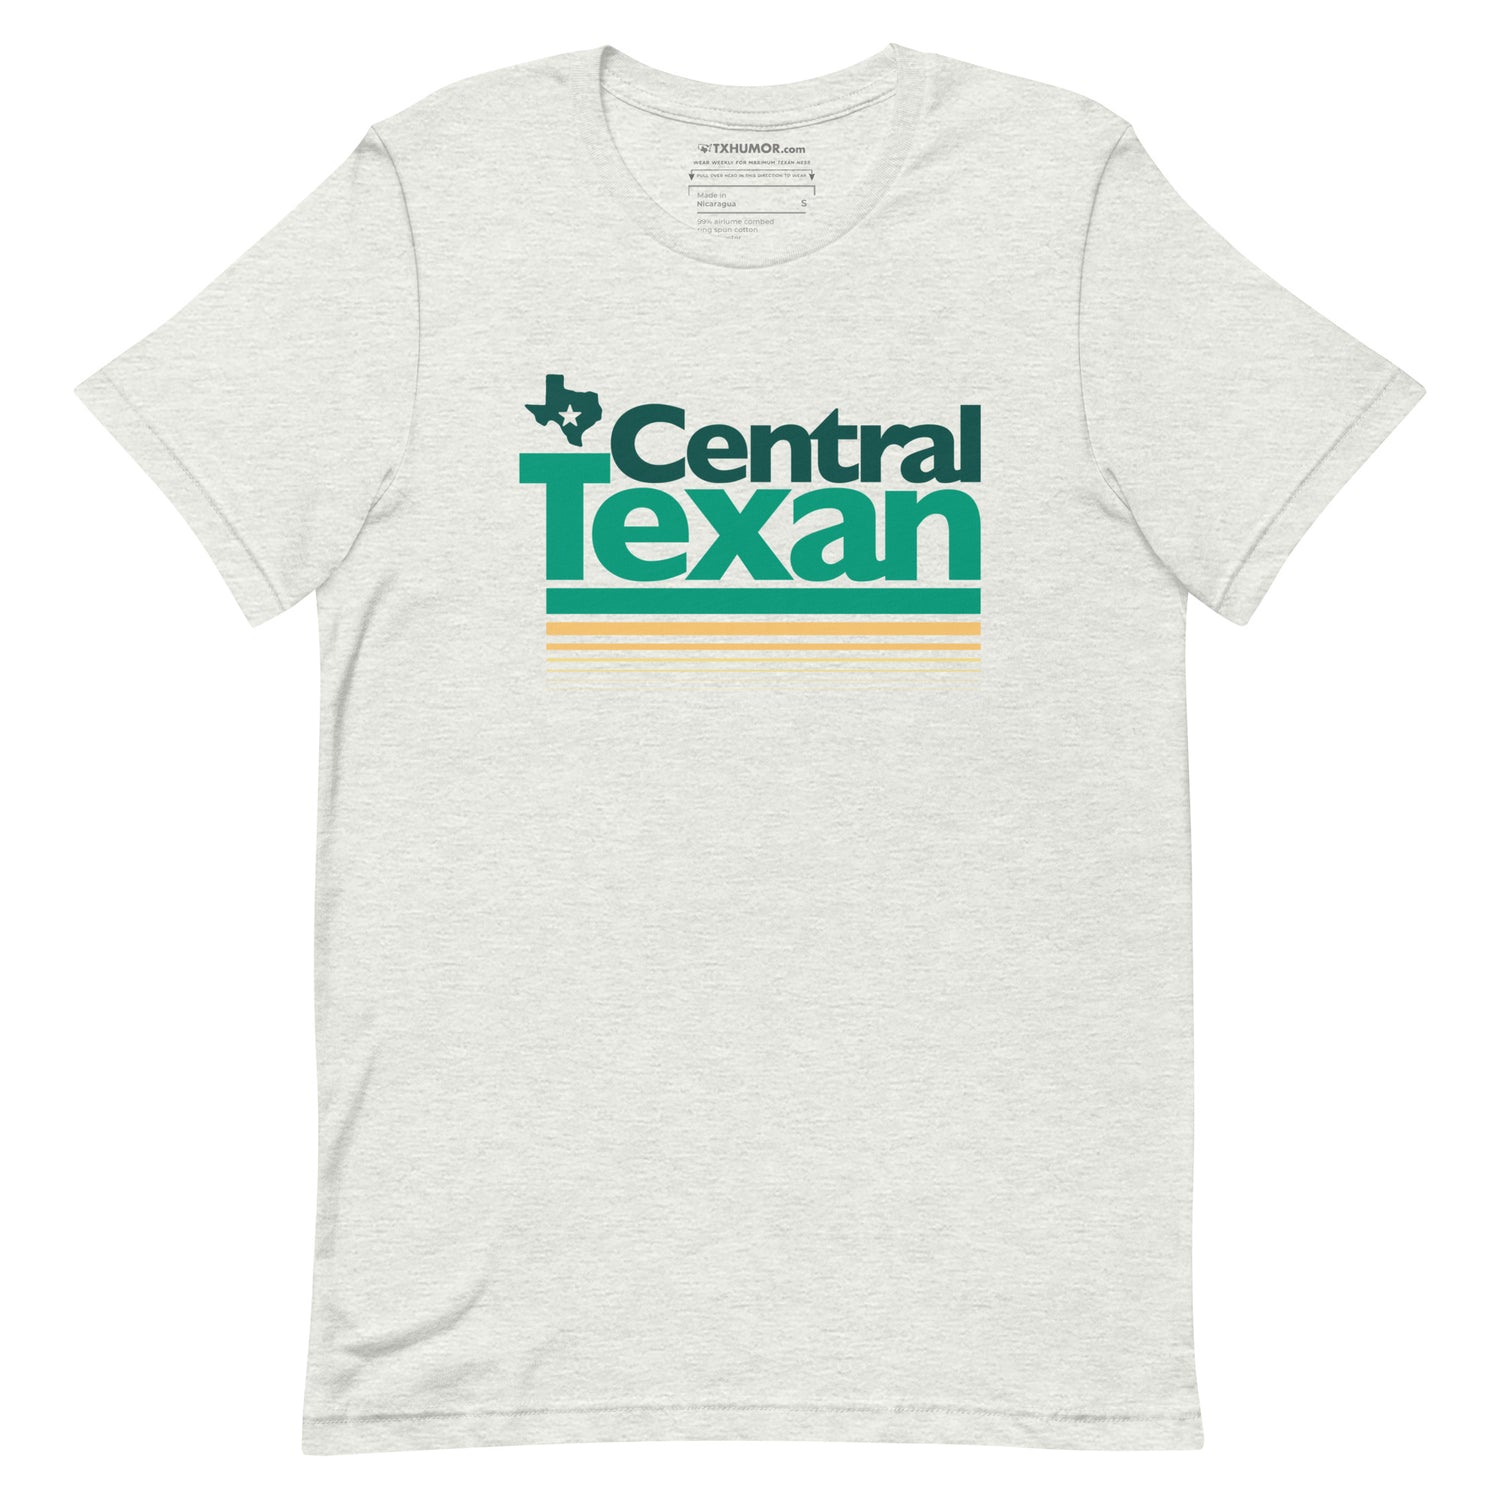 Central Texan T-shirt